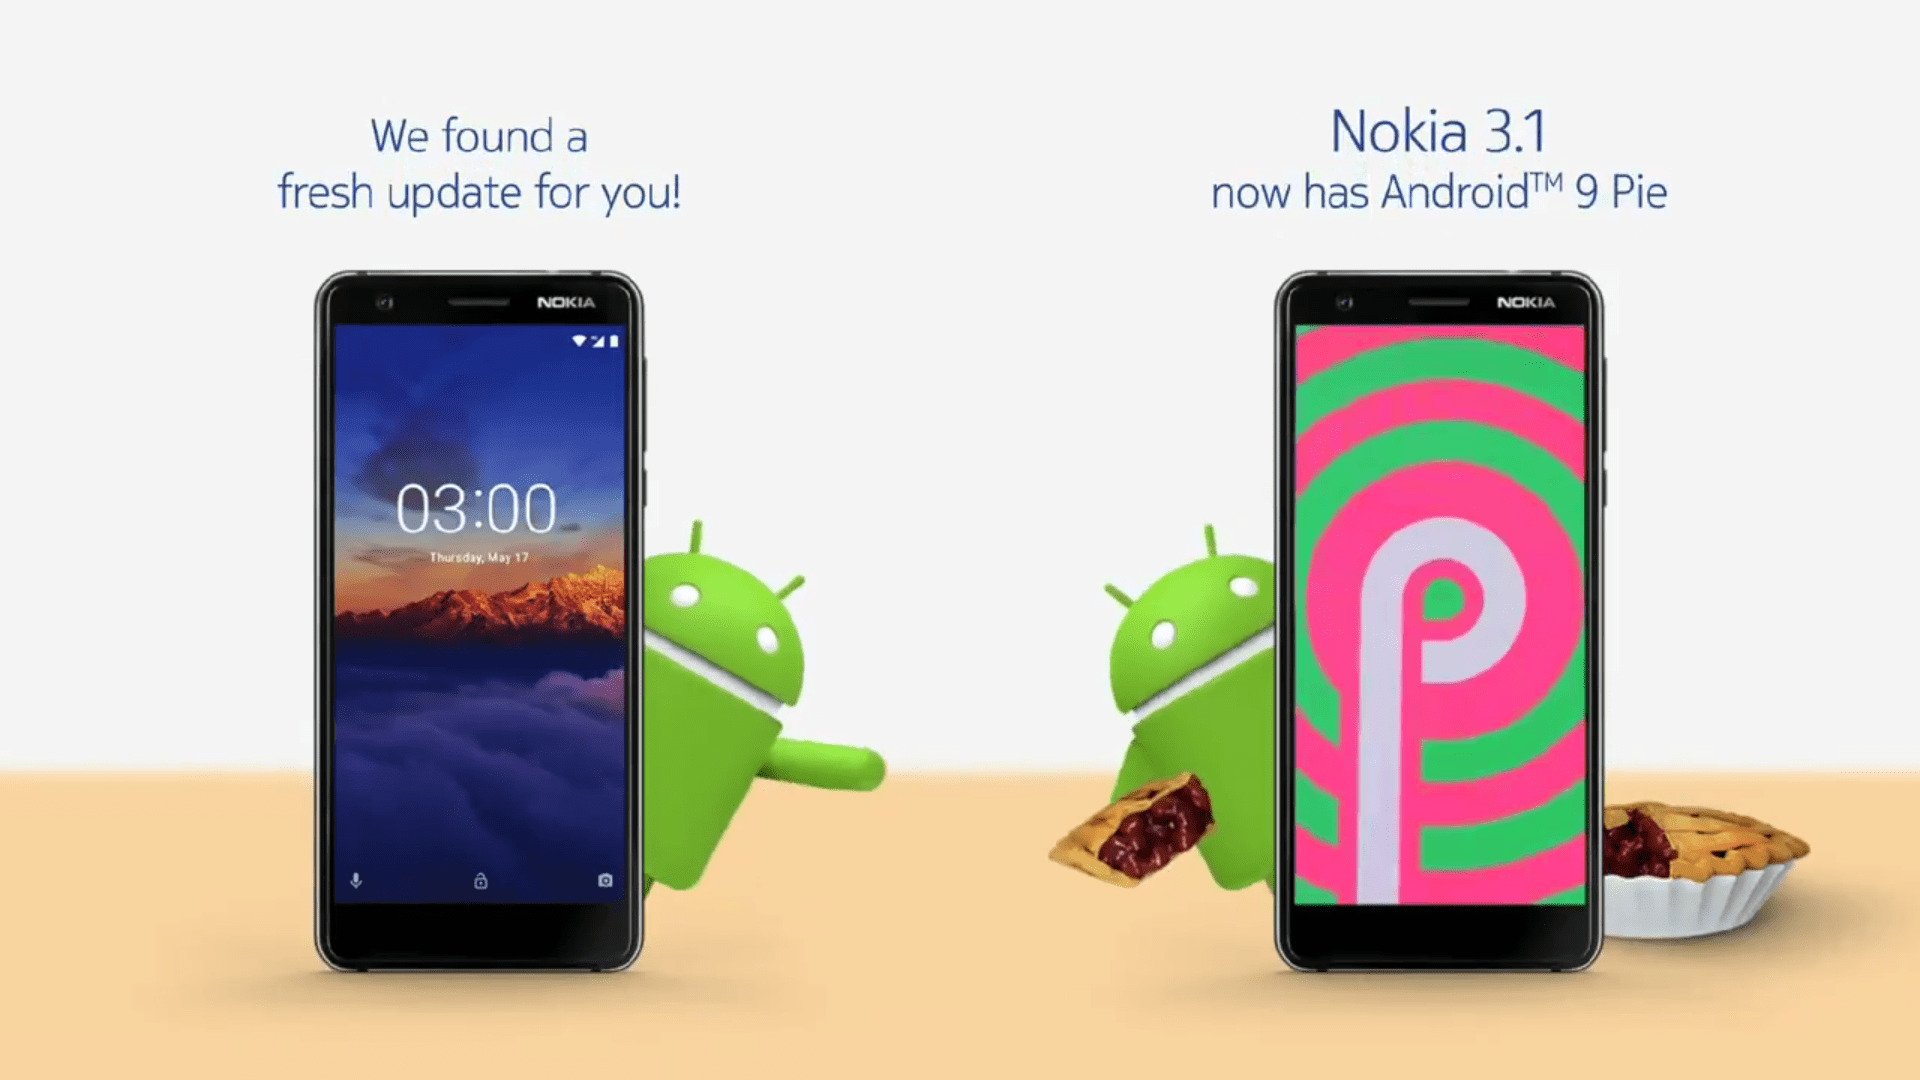 Nokia 3.1 - Android 9 Pie Update